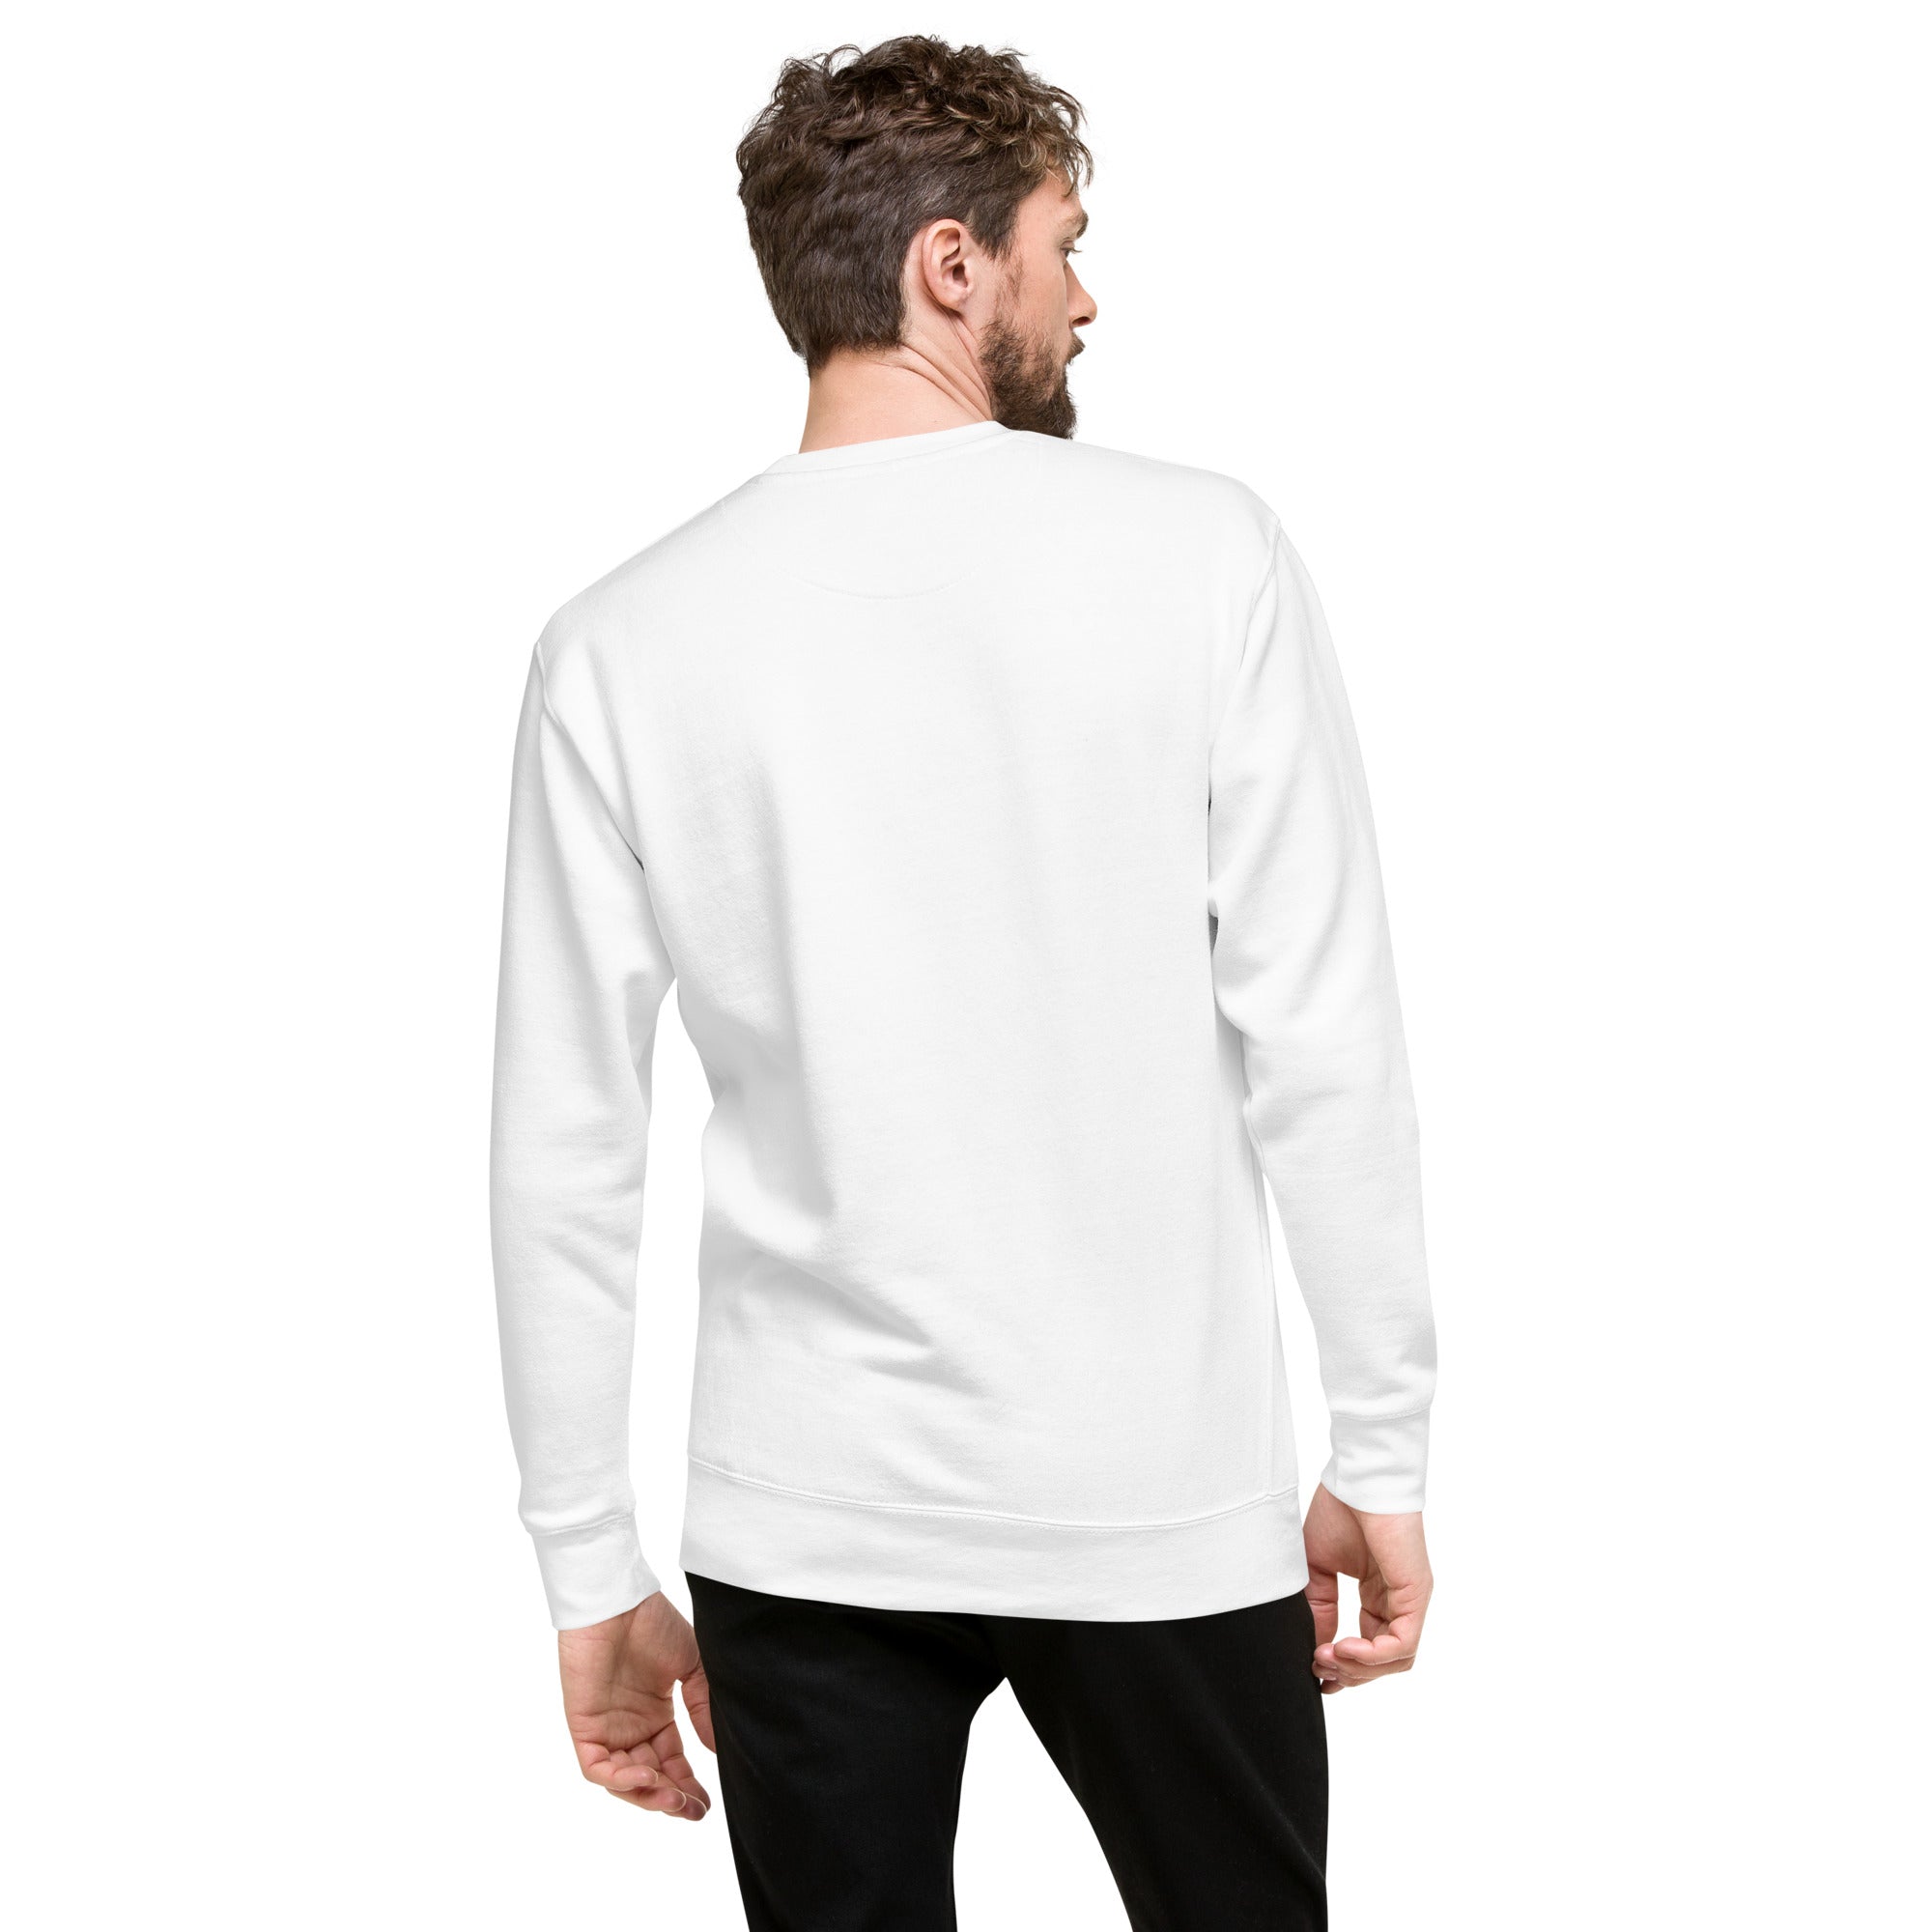 'Super Best Type' Unisex Premium Sweatshirt